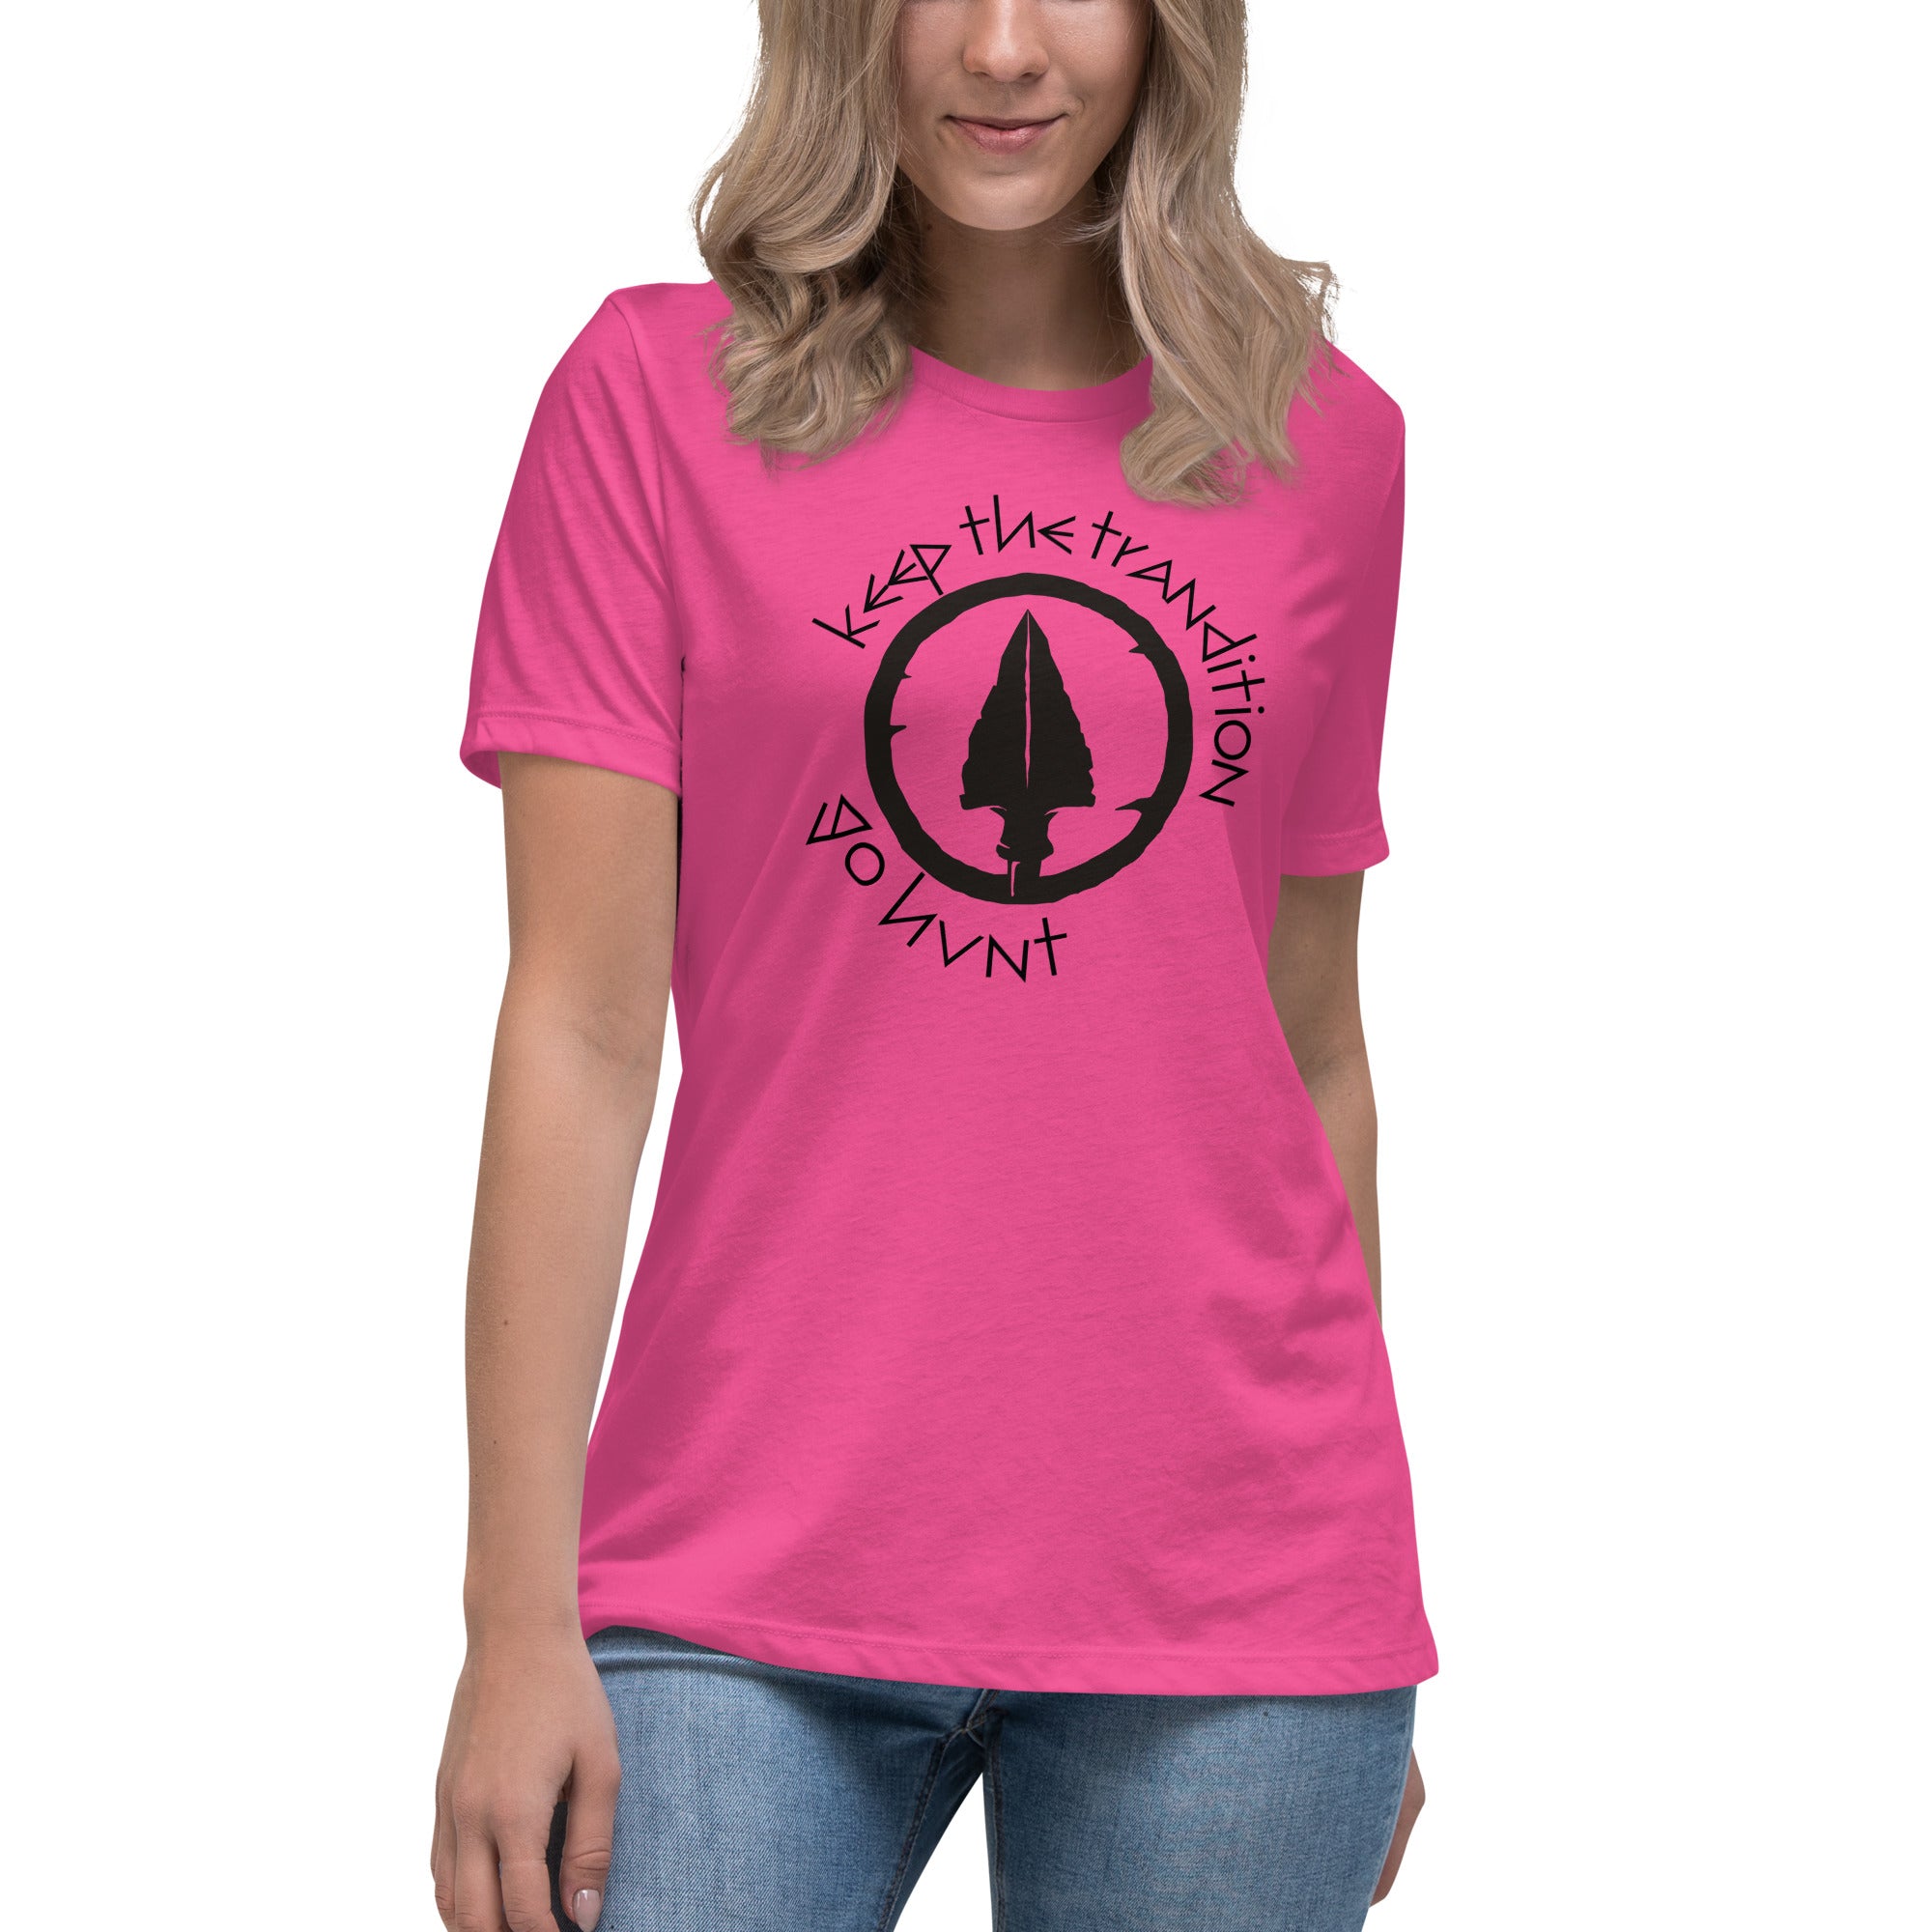 Keep The Tradition Women's Premium T-Shirt - Go Hunt